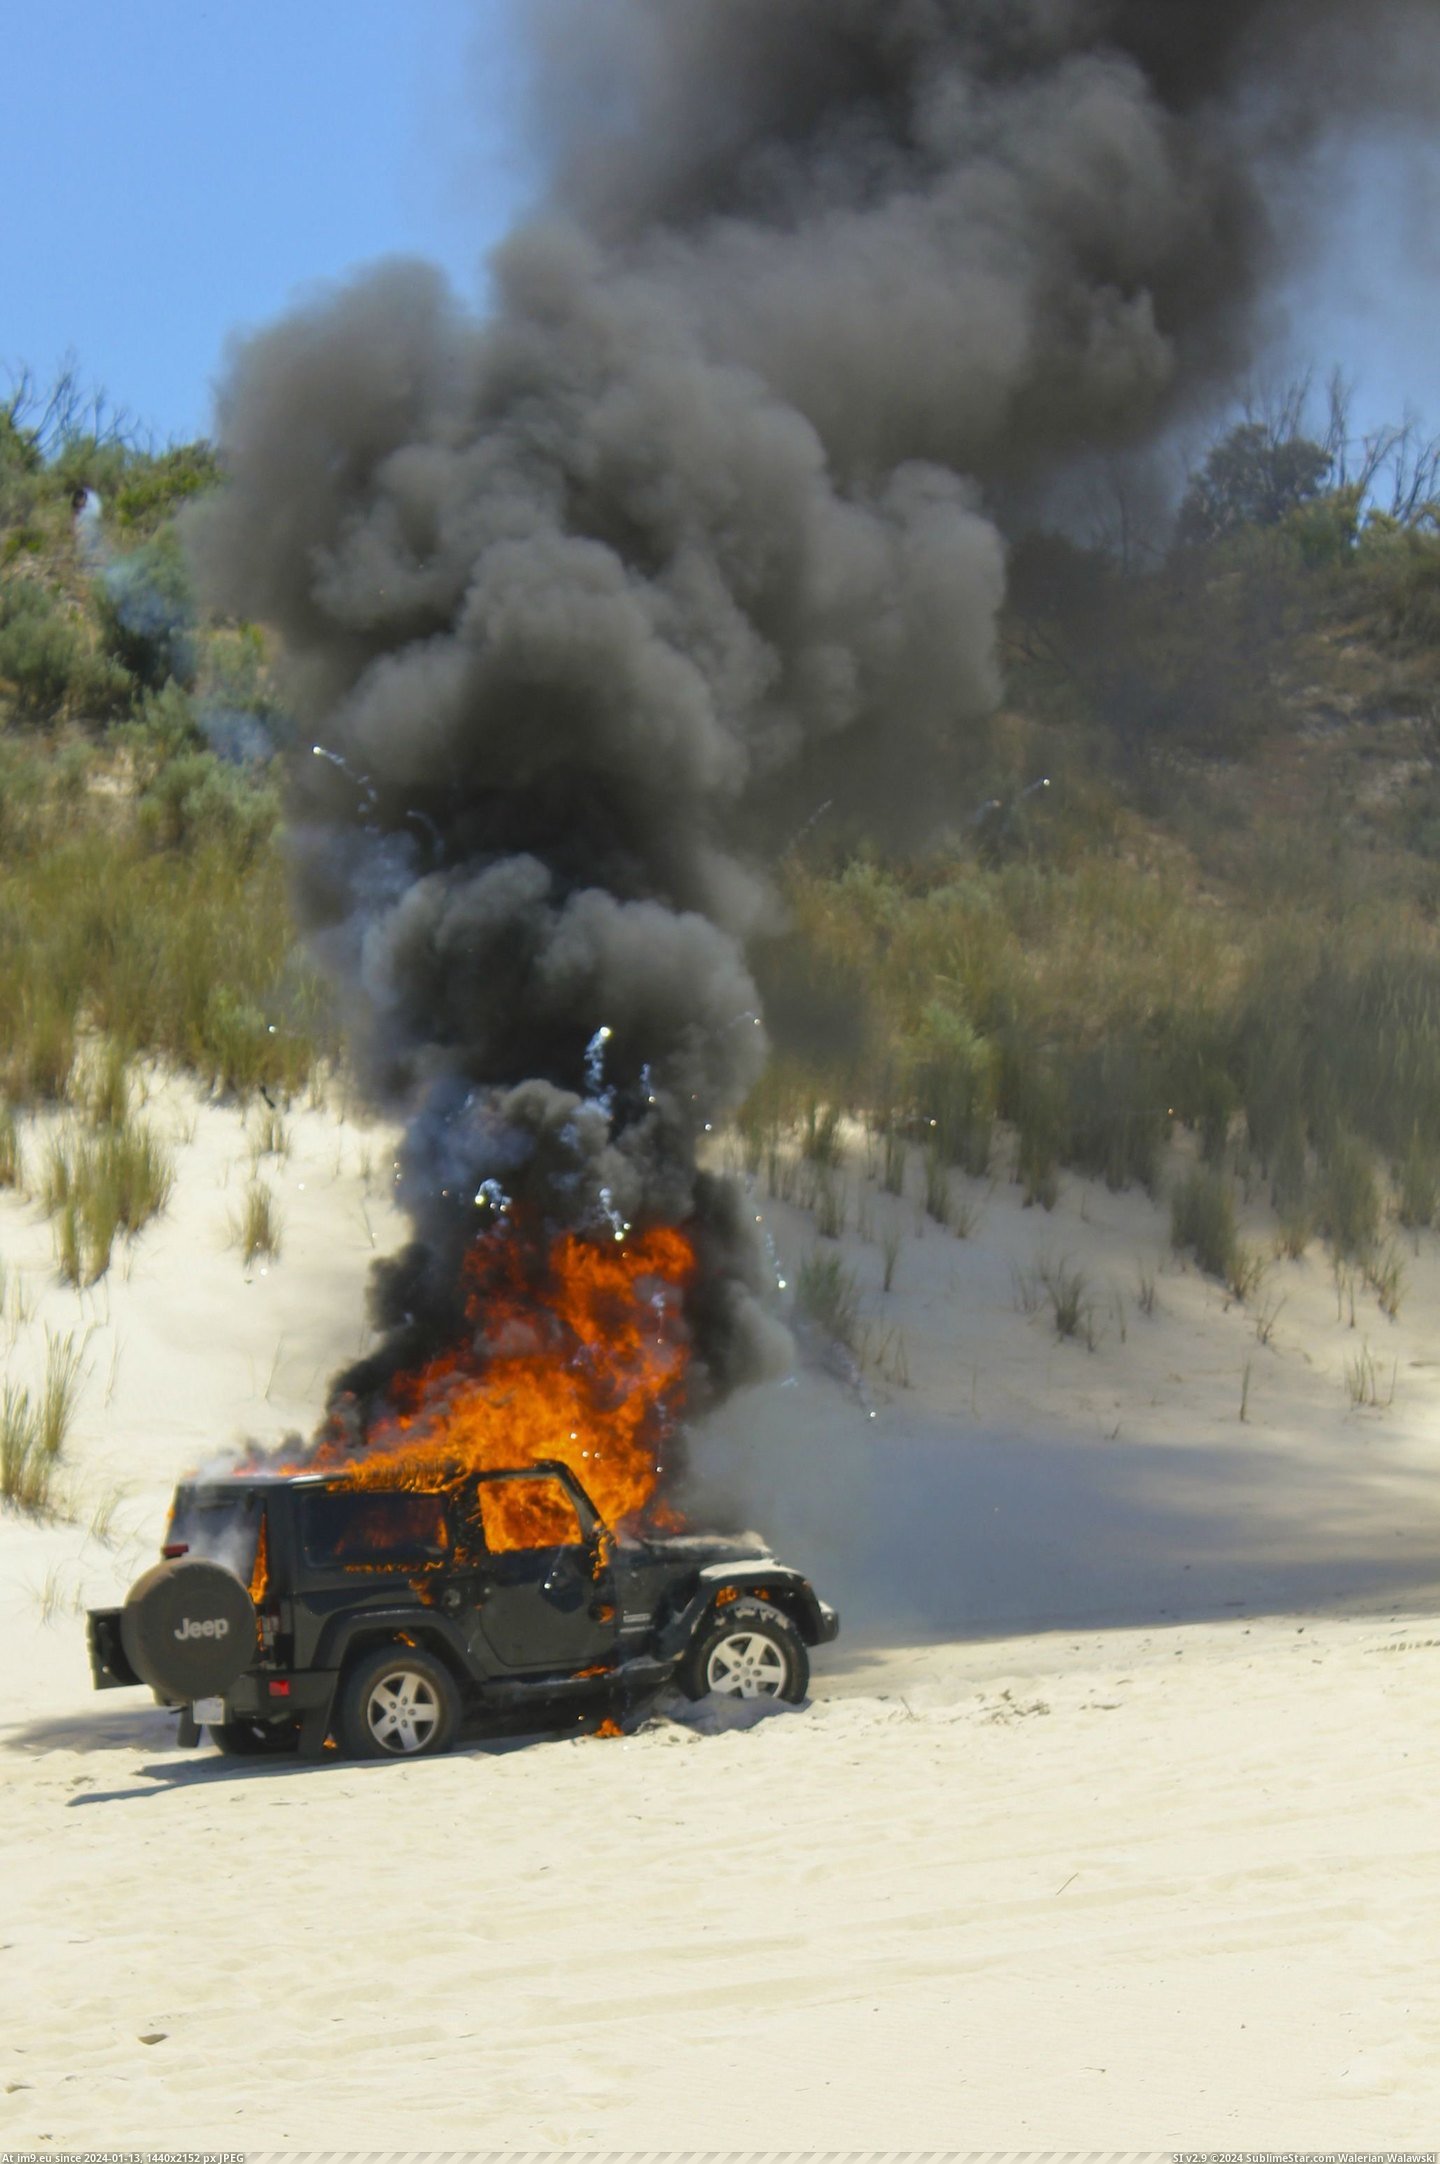 #Interested #Wrangler #Explodes #Jeep [Pics] Wrangler explodes, Jeep not interested 4 Pic. (Obraz z album My r/PICS favs))